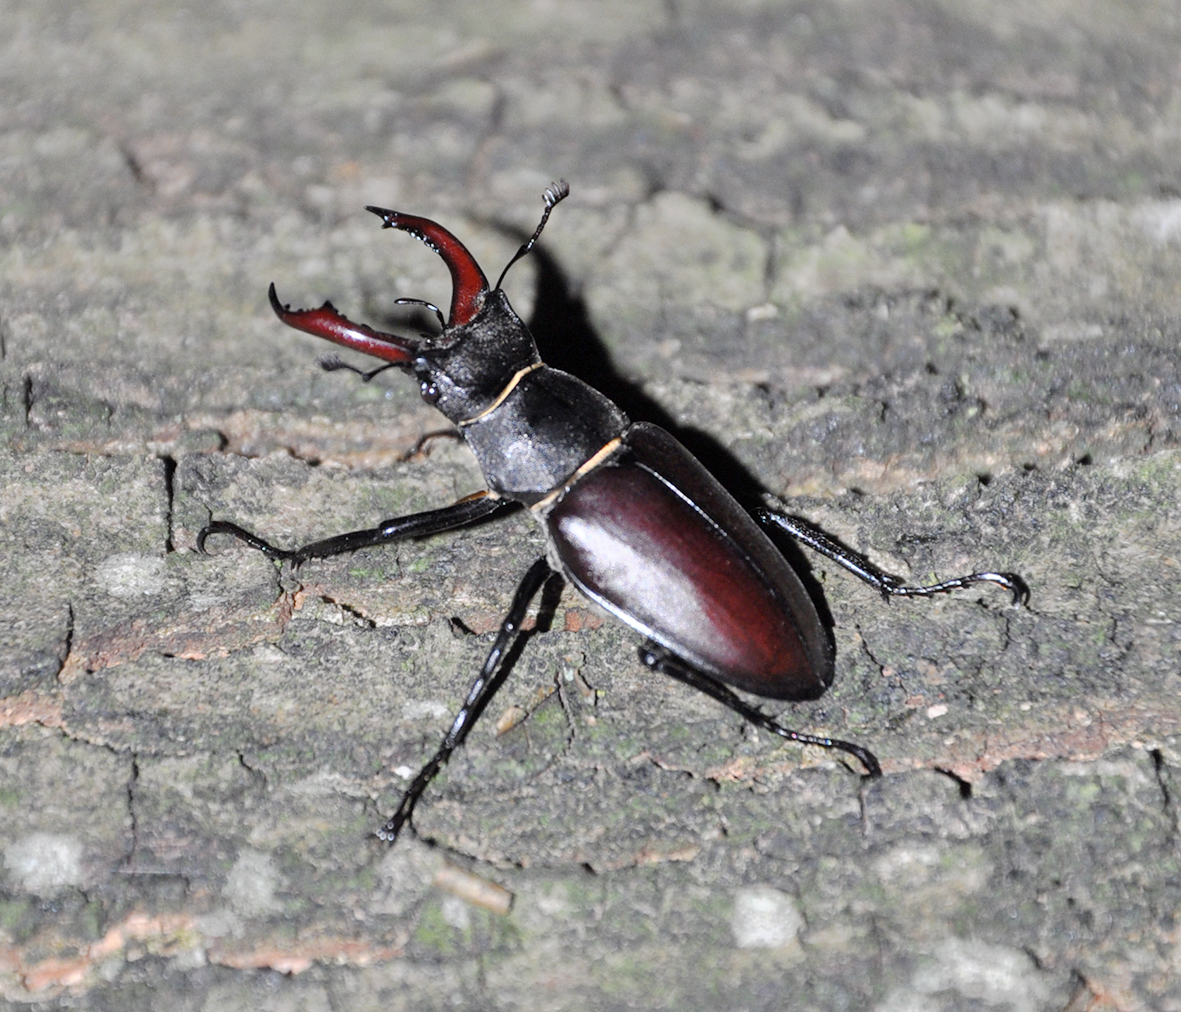 Stag beetle (Lucanus cervus) (Photo: Dennis Wansink)